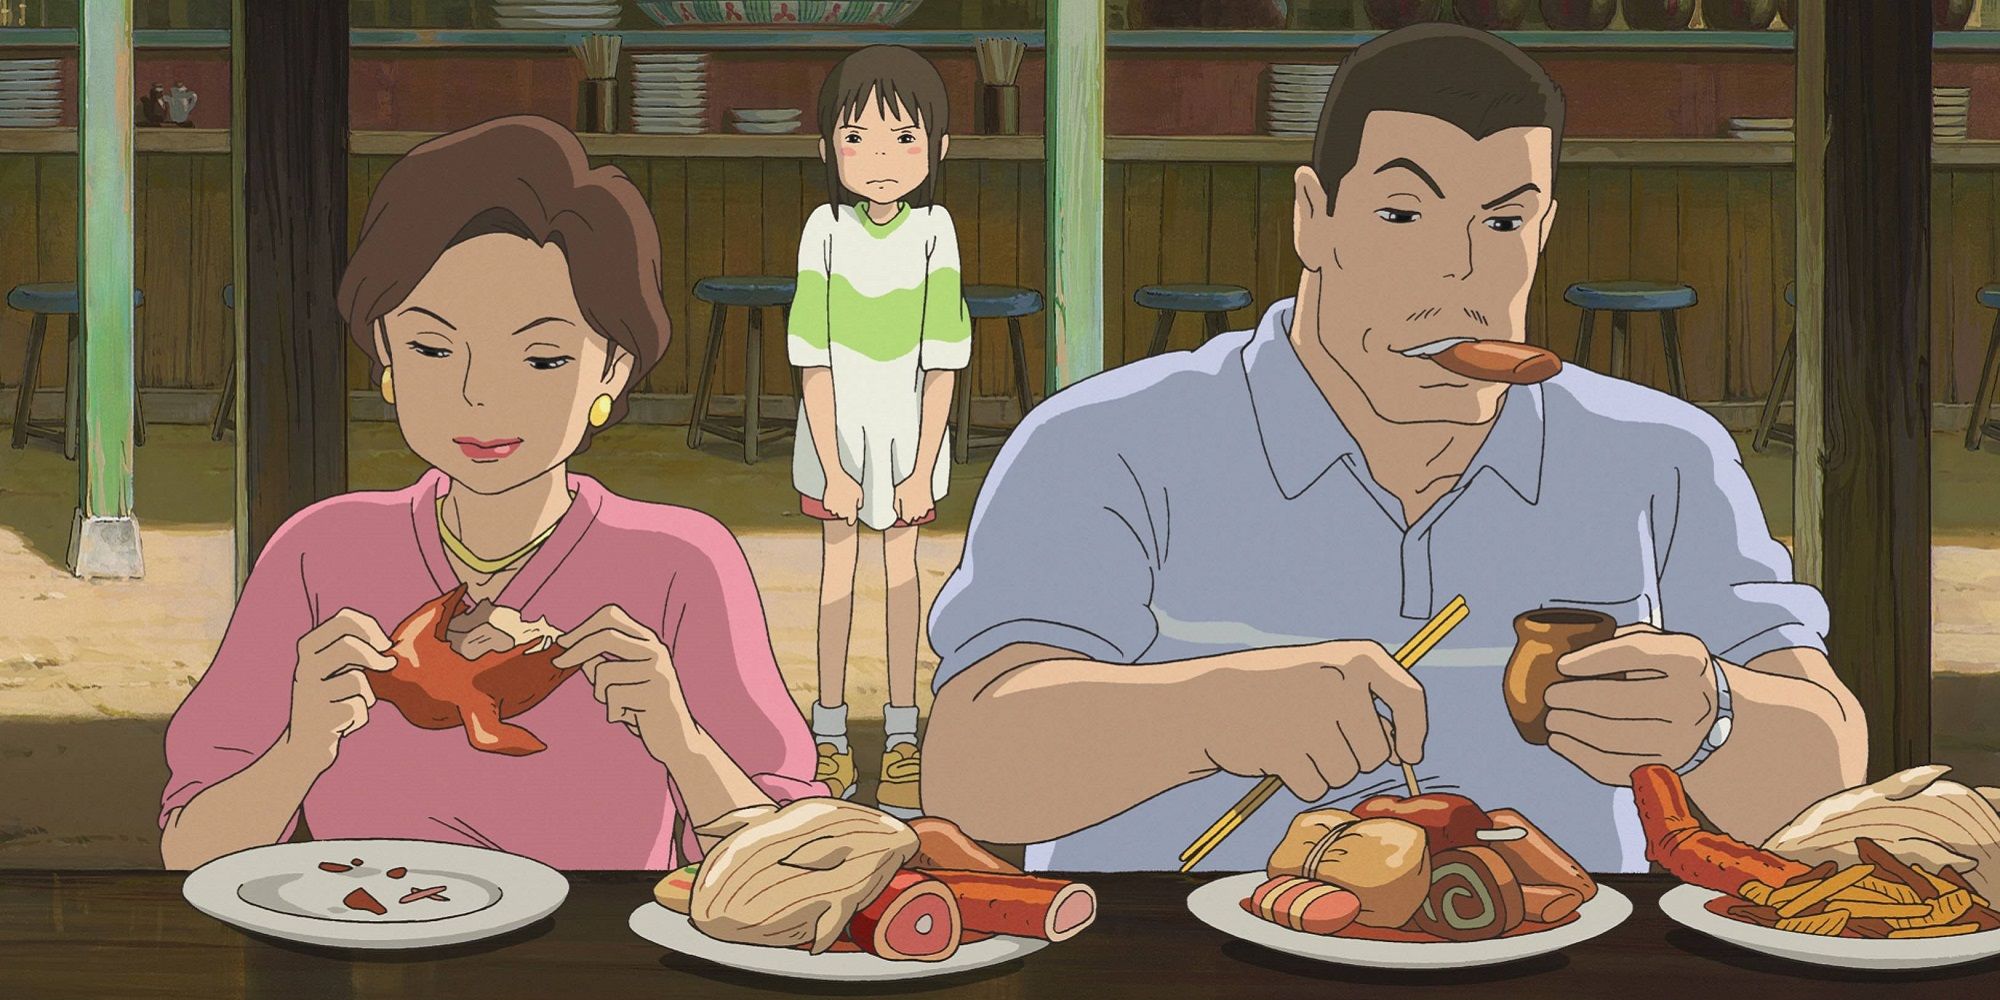 Chihiro's parents in Spirited Away